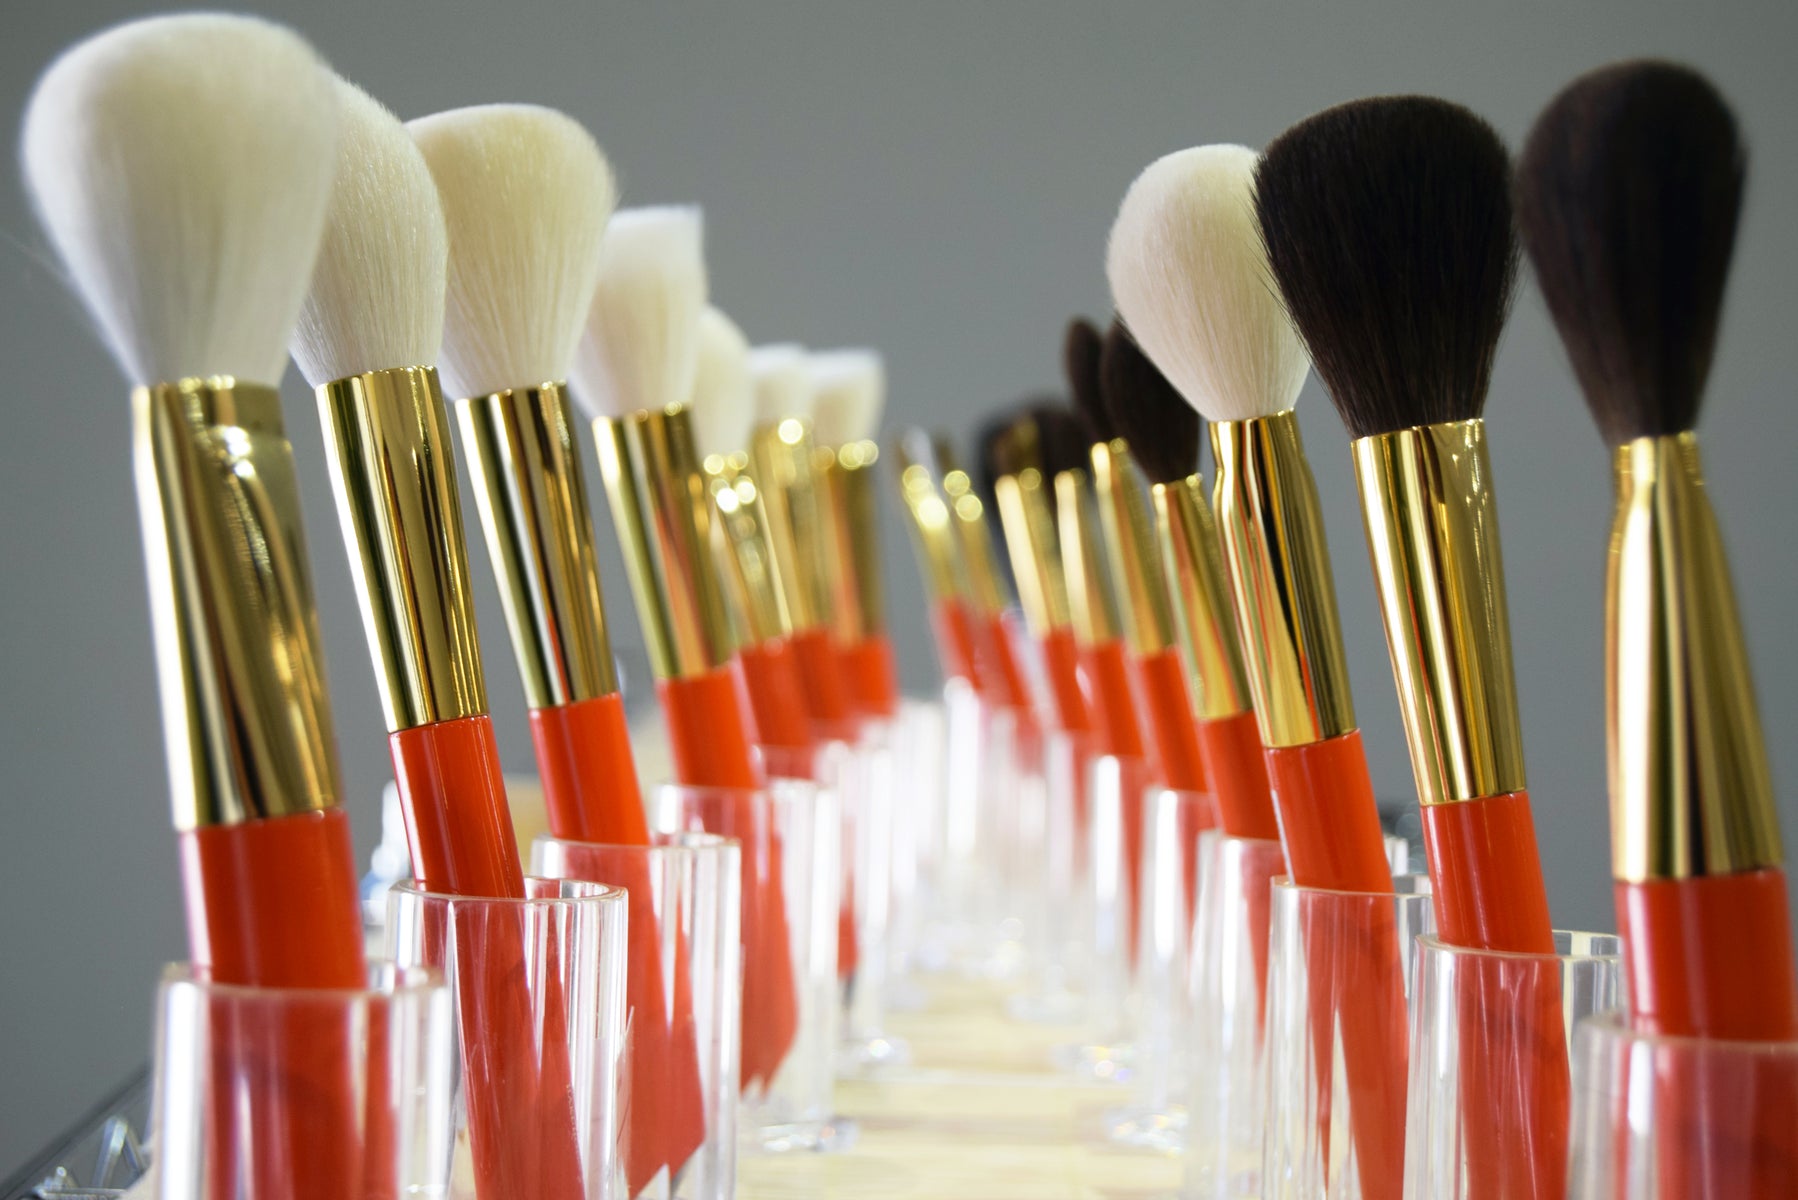 Cosmetics Brush Set, Shop-All/Makeup/Enhance